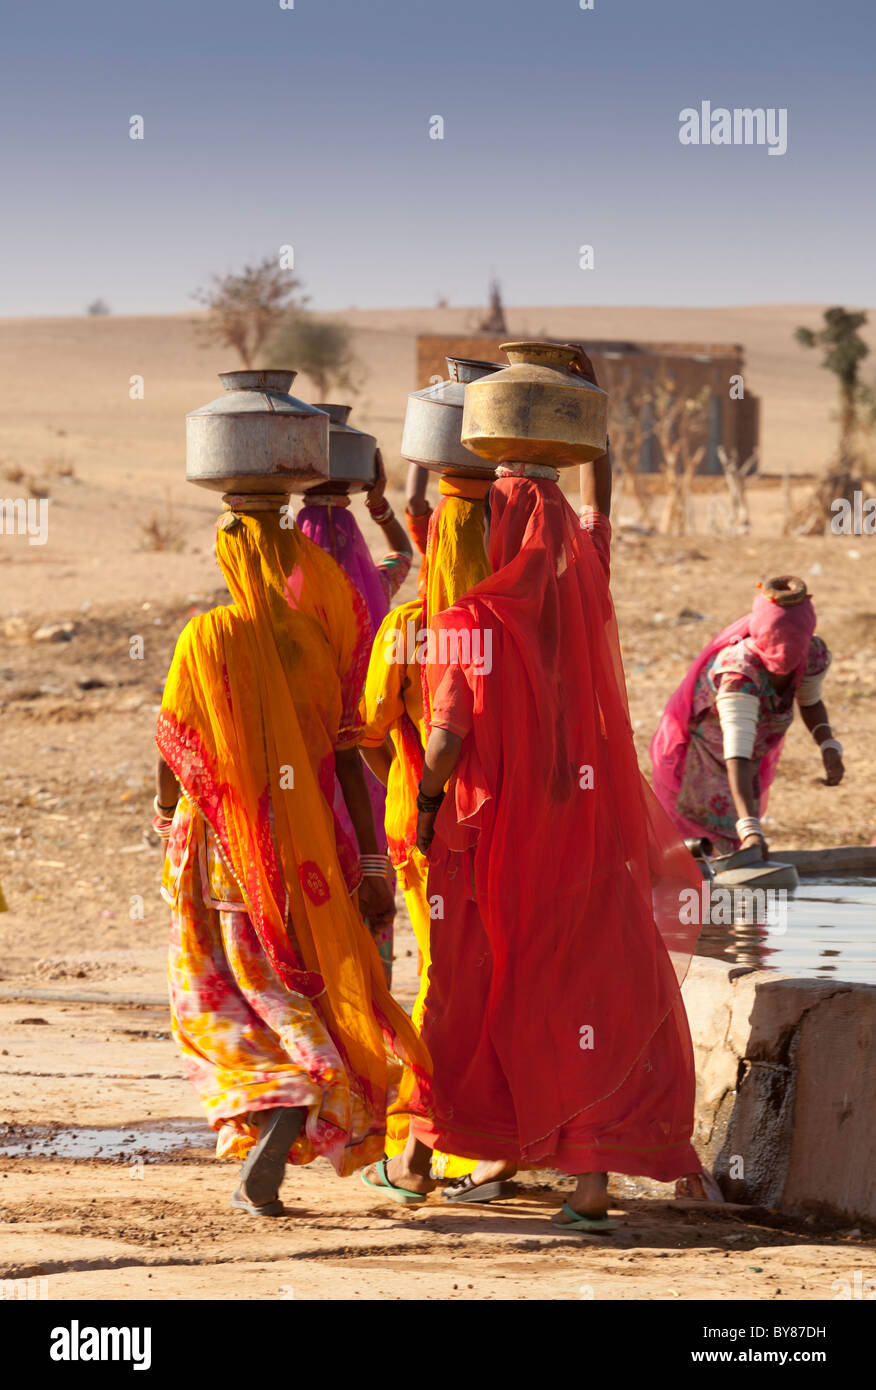 India, Rajasthan, women carrying water near village tank Stock Photo